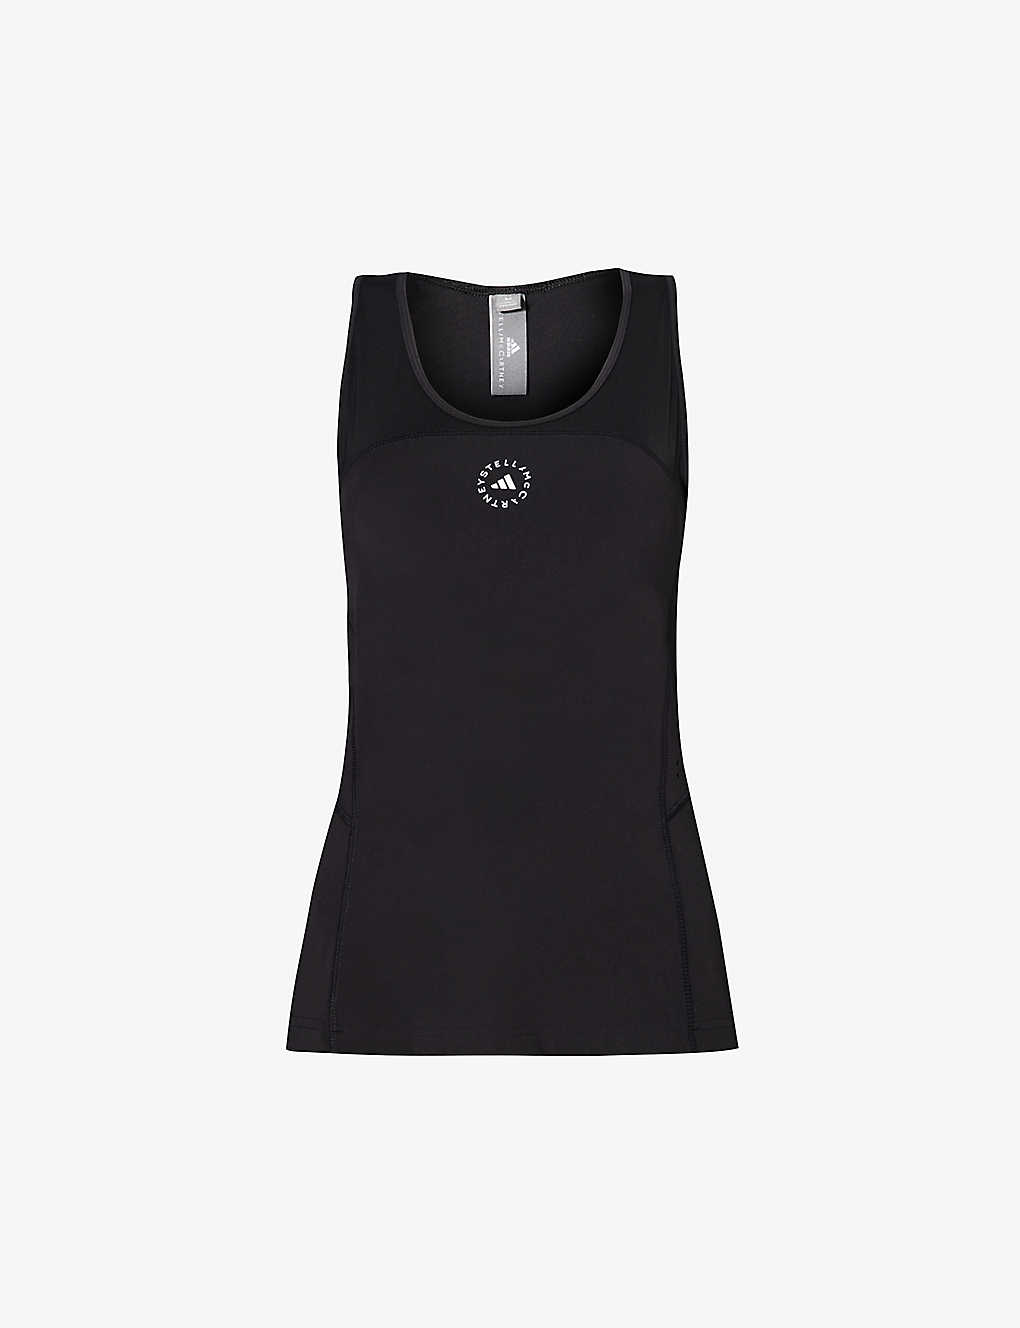 Shop Adidas By Stella Mccartney Women's Black Truepurpose Racerback Stretch-recycled Polyester-blend Top